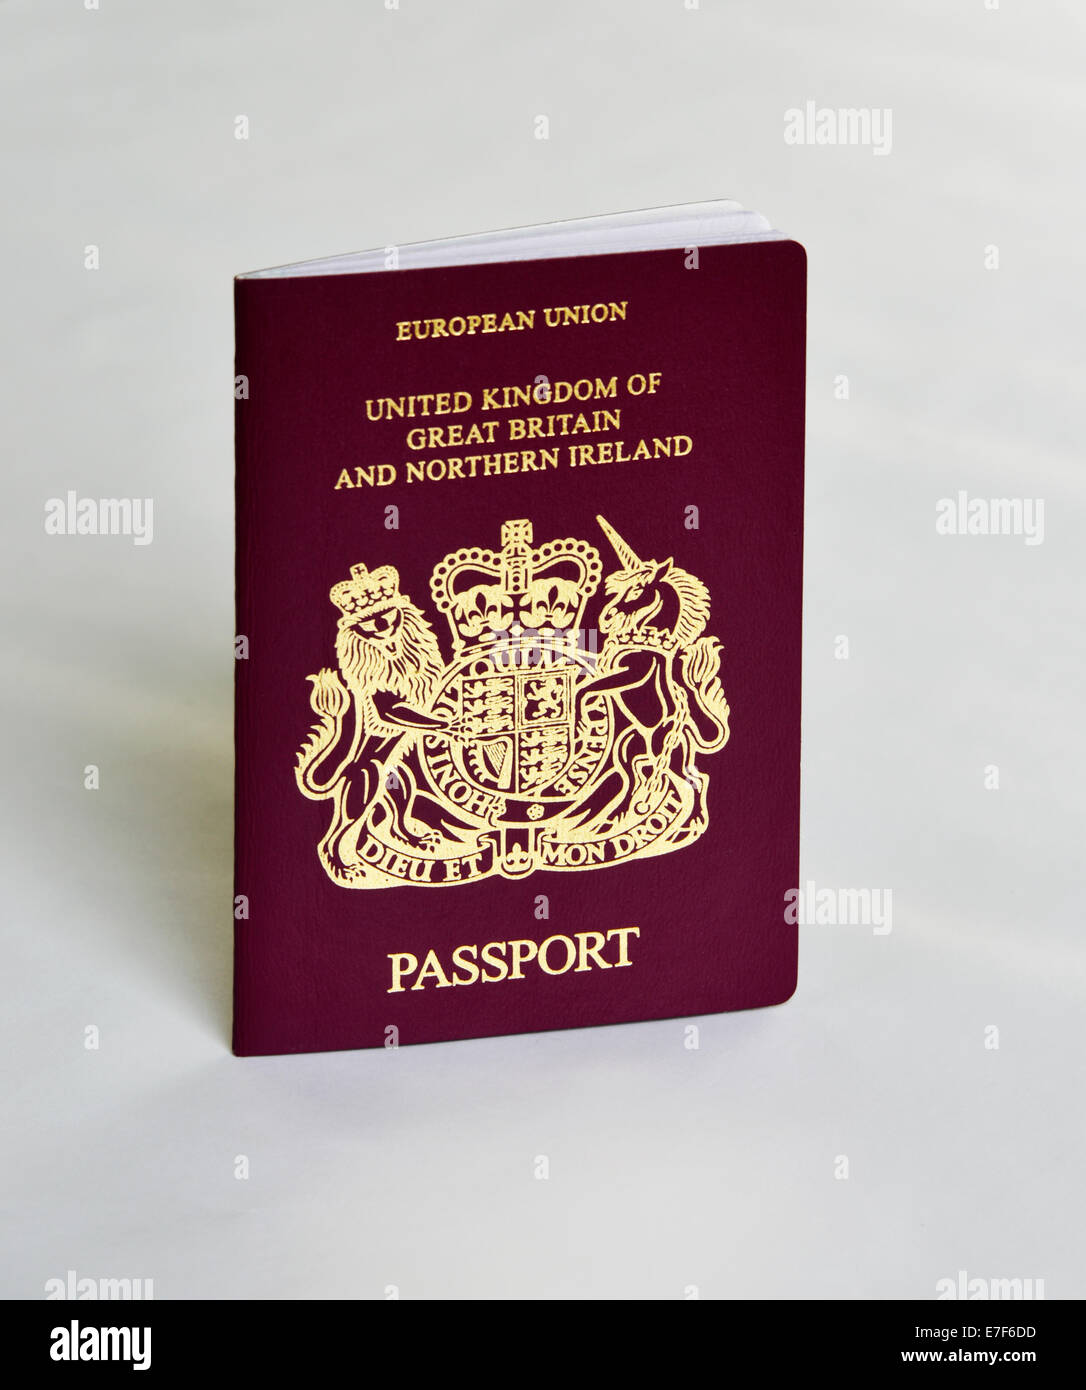 Passport. United Kingdom of Great Britain and Northern Ireland. European Union. Stock Photo